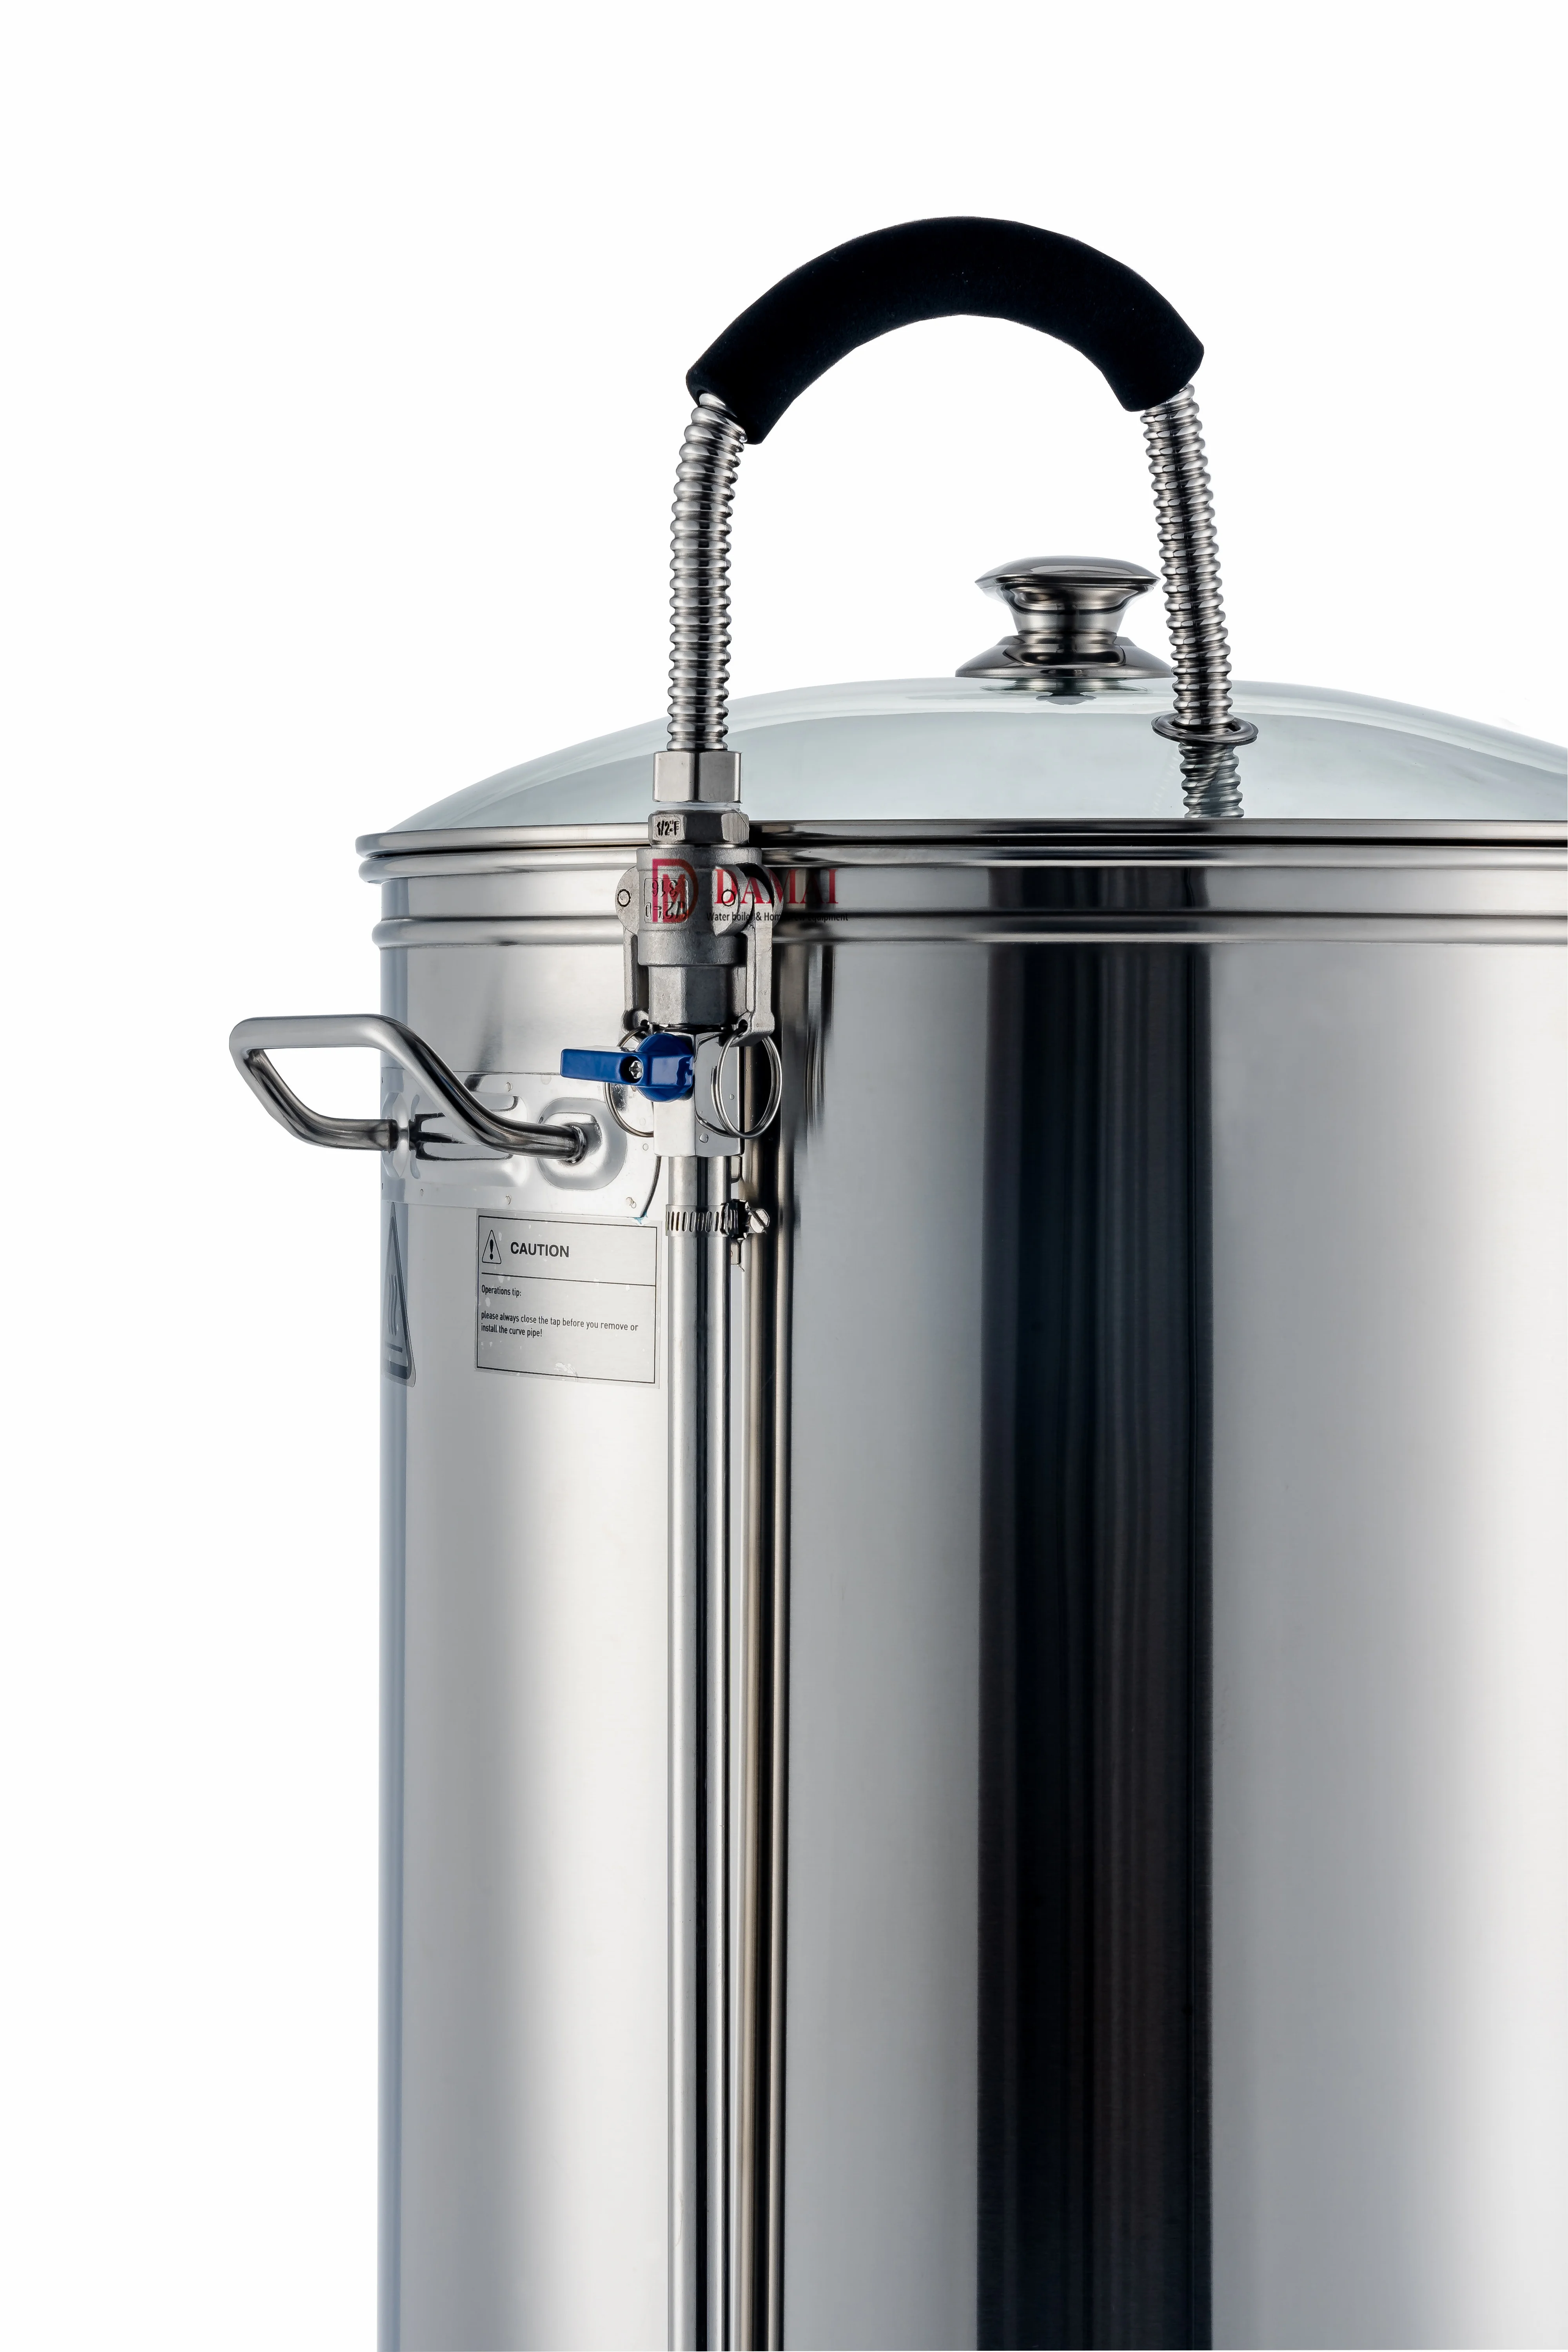 
60L home brewing equipment/maquina para hacer cerveza/Beer mash tun/50L similar Guten Microbrewery 